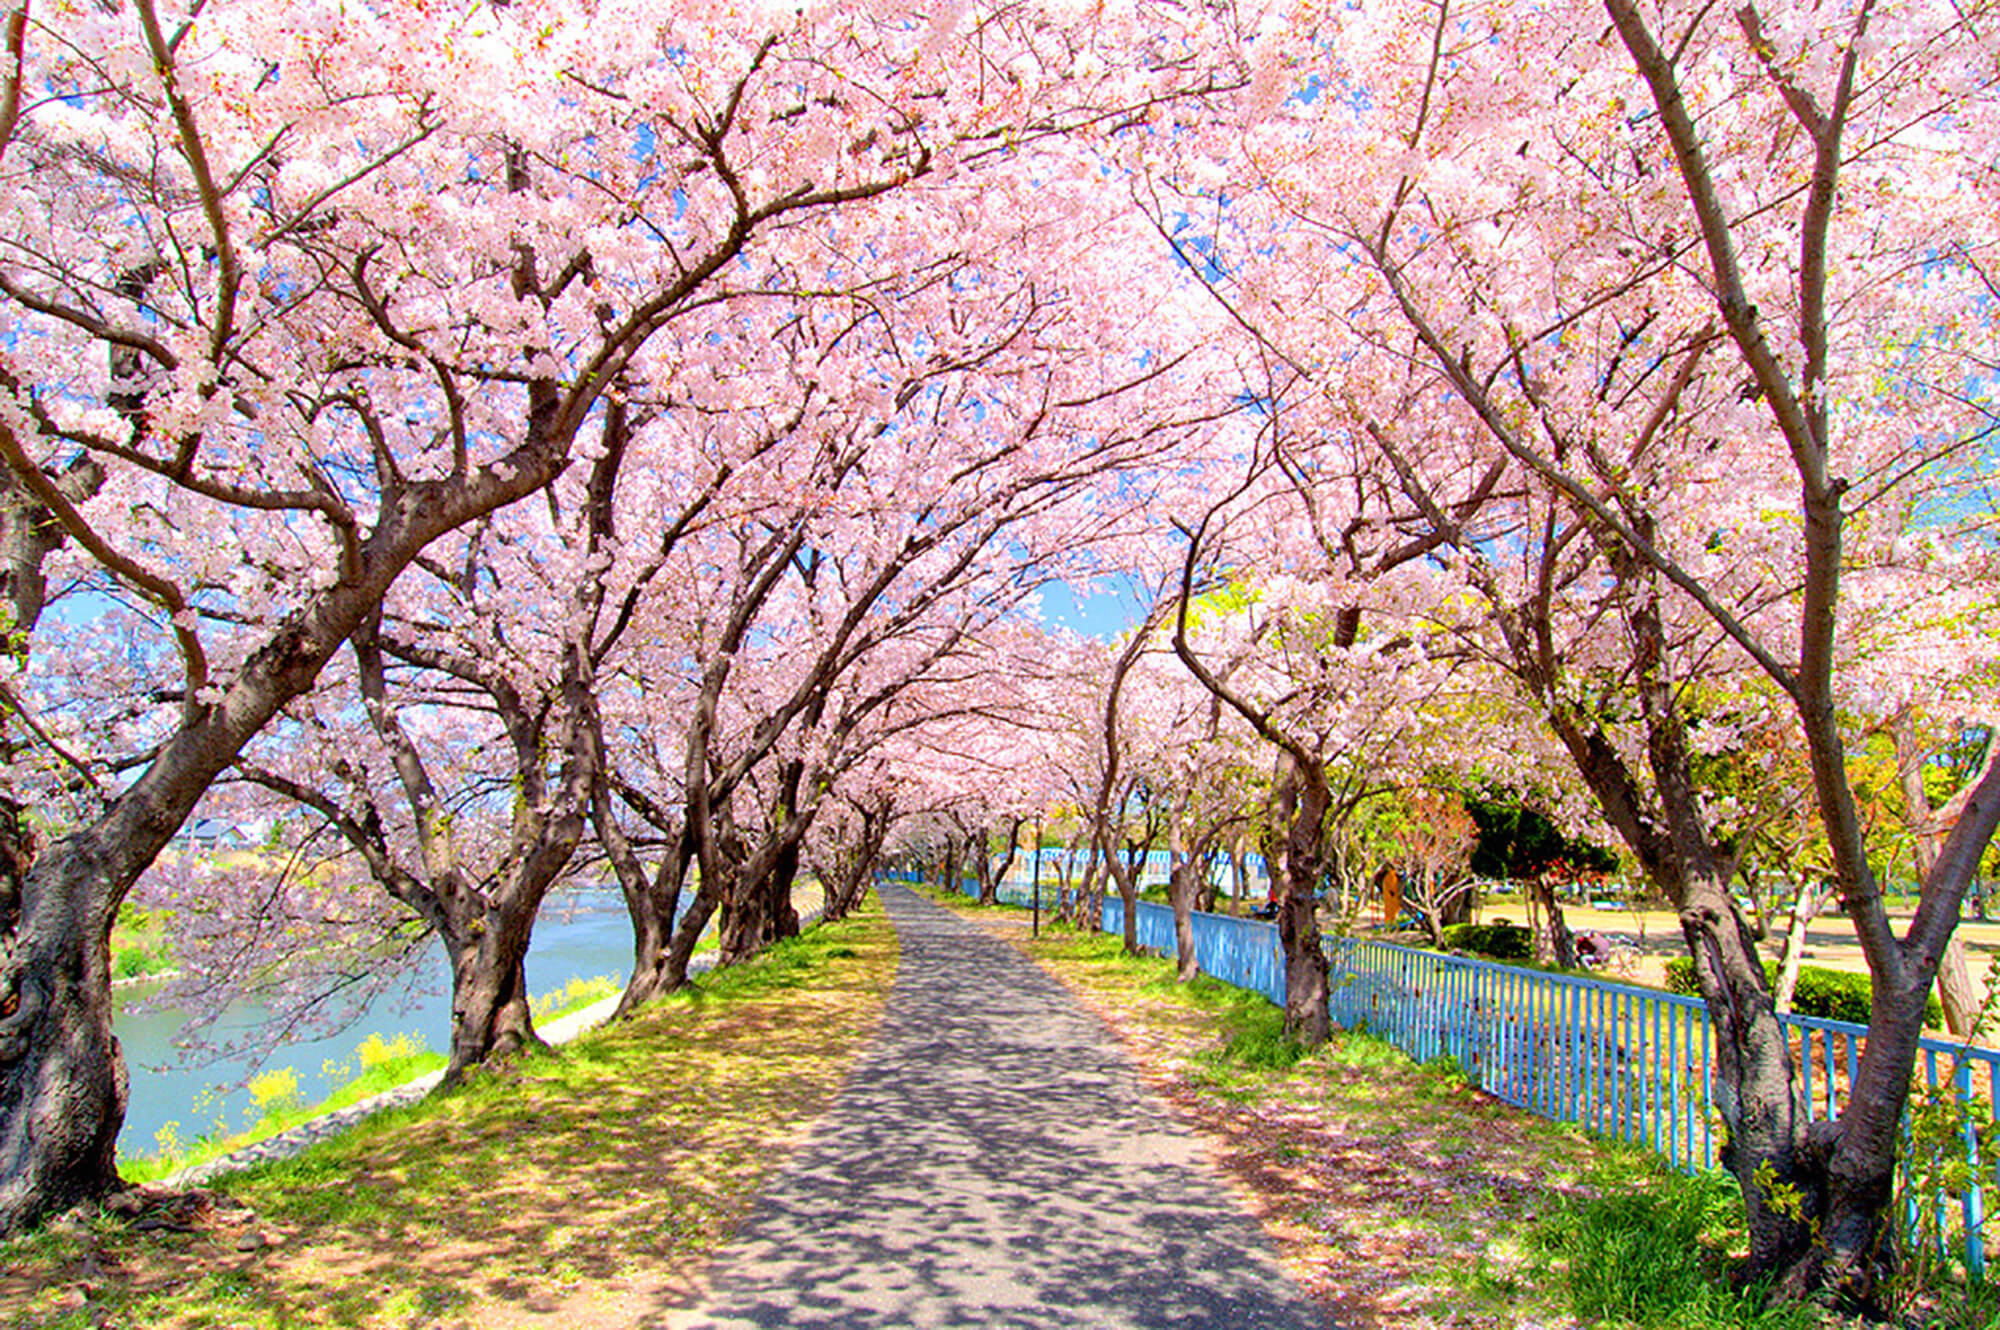 Higashiyama Zoo and Botanical Gardens with sakura